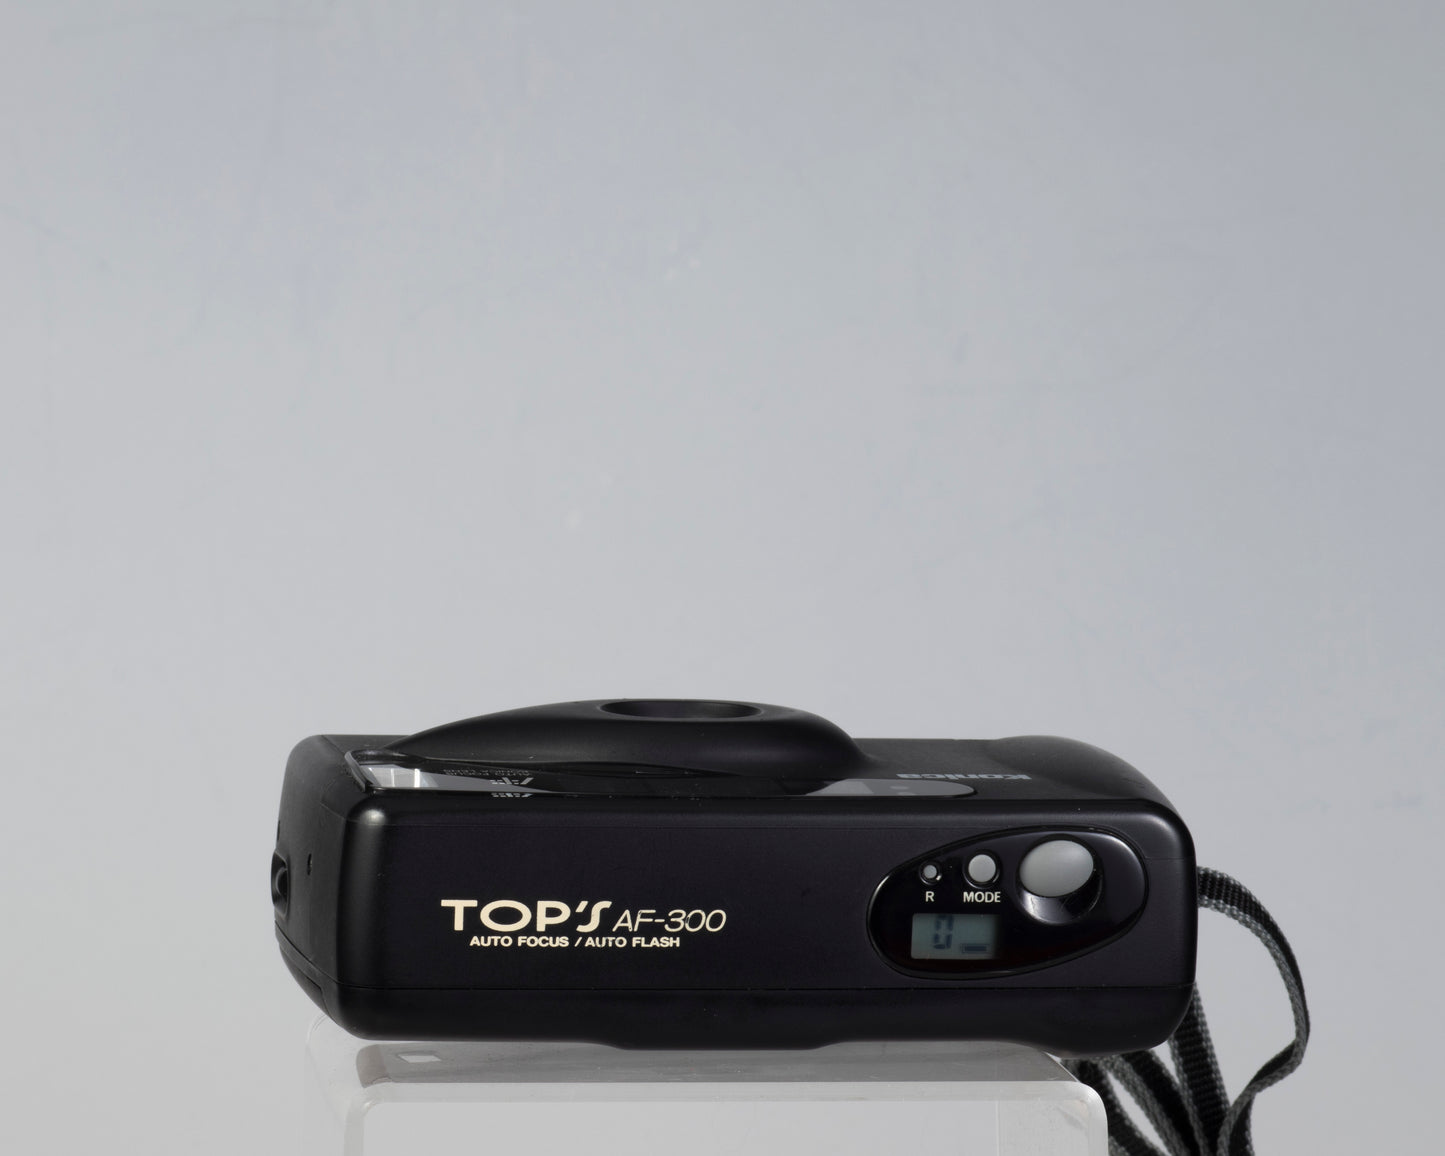 Konica TOP's AF-300 35mm camera w/ original box, case, and manual (serial 2732081)